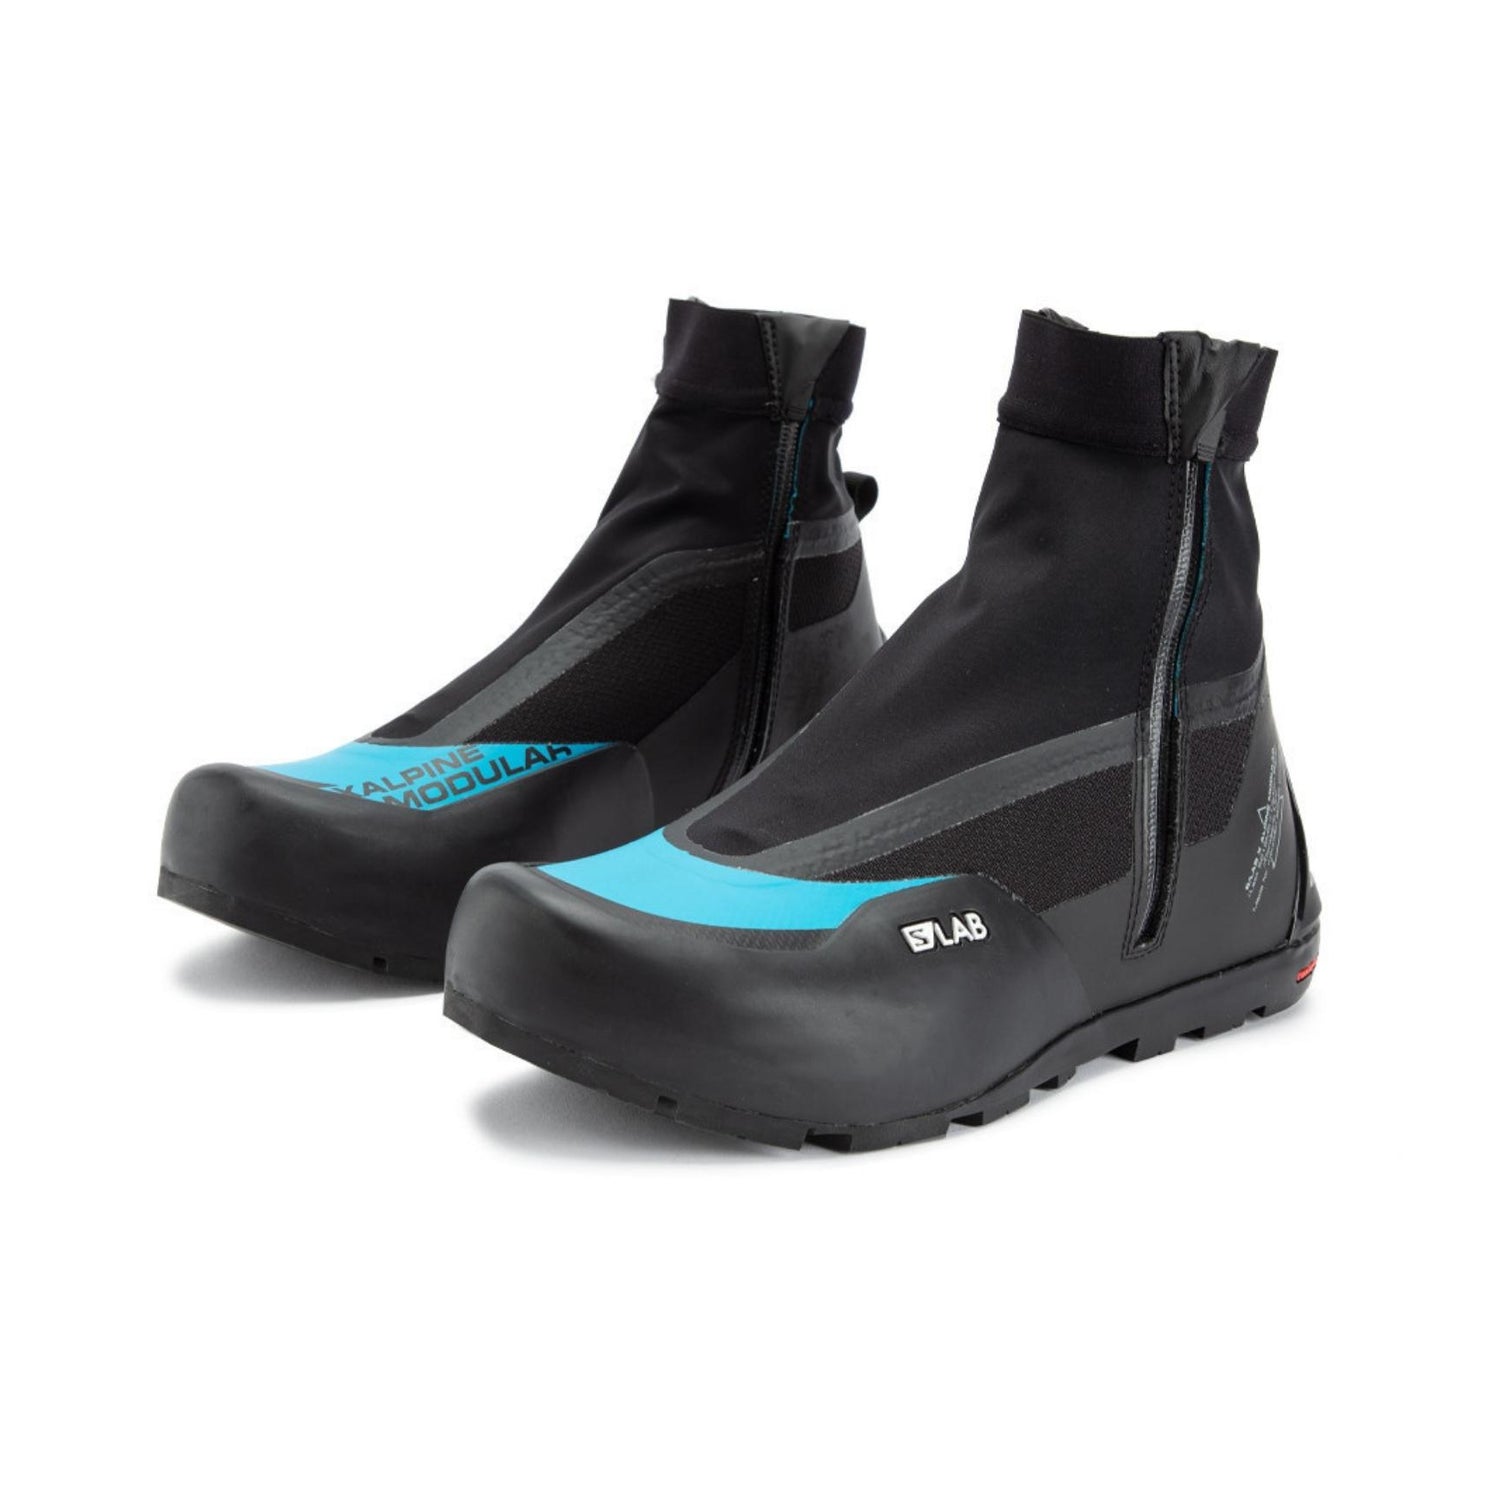 Salomon S/LAB X Alpine Modular Trail Running Shoes review